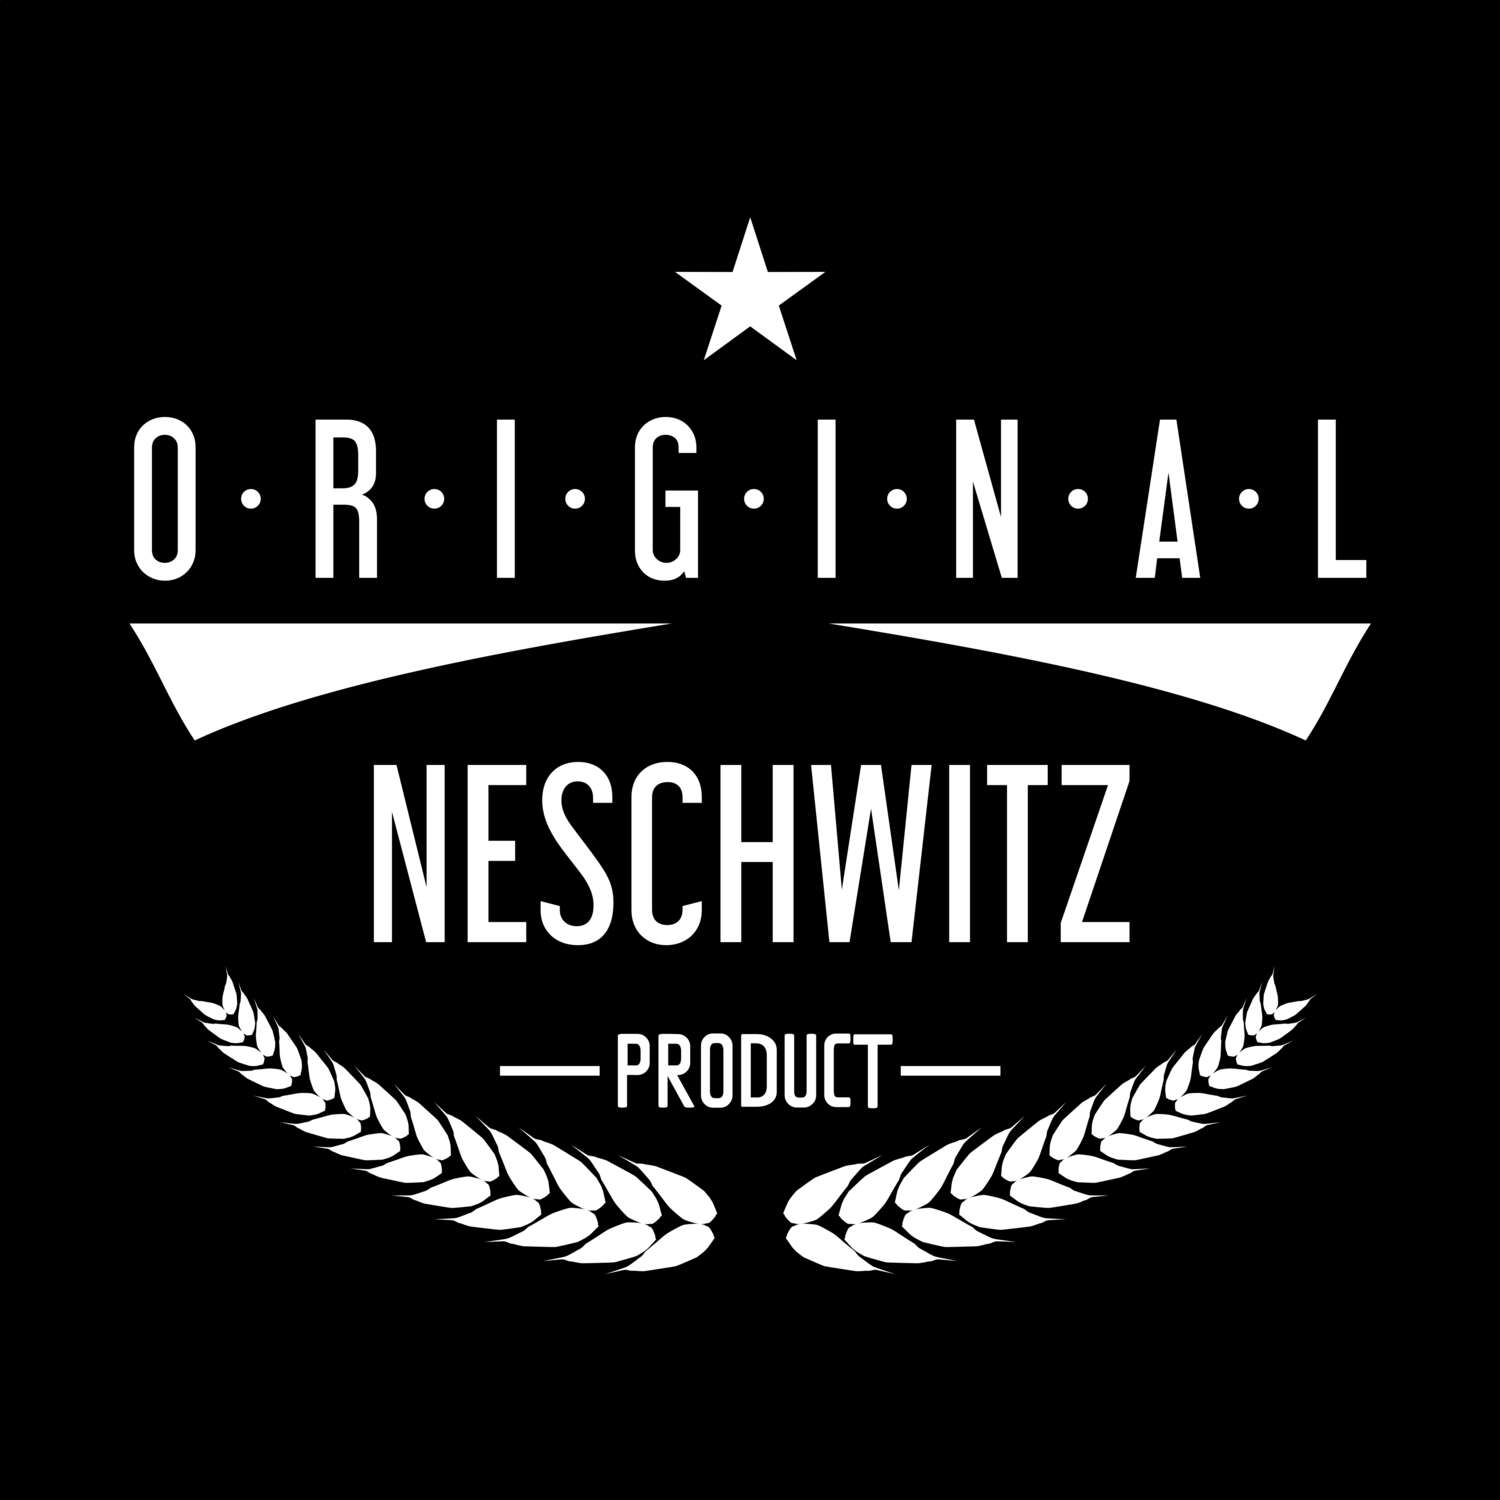 Neschwitz T-Shirt »Original Product«